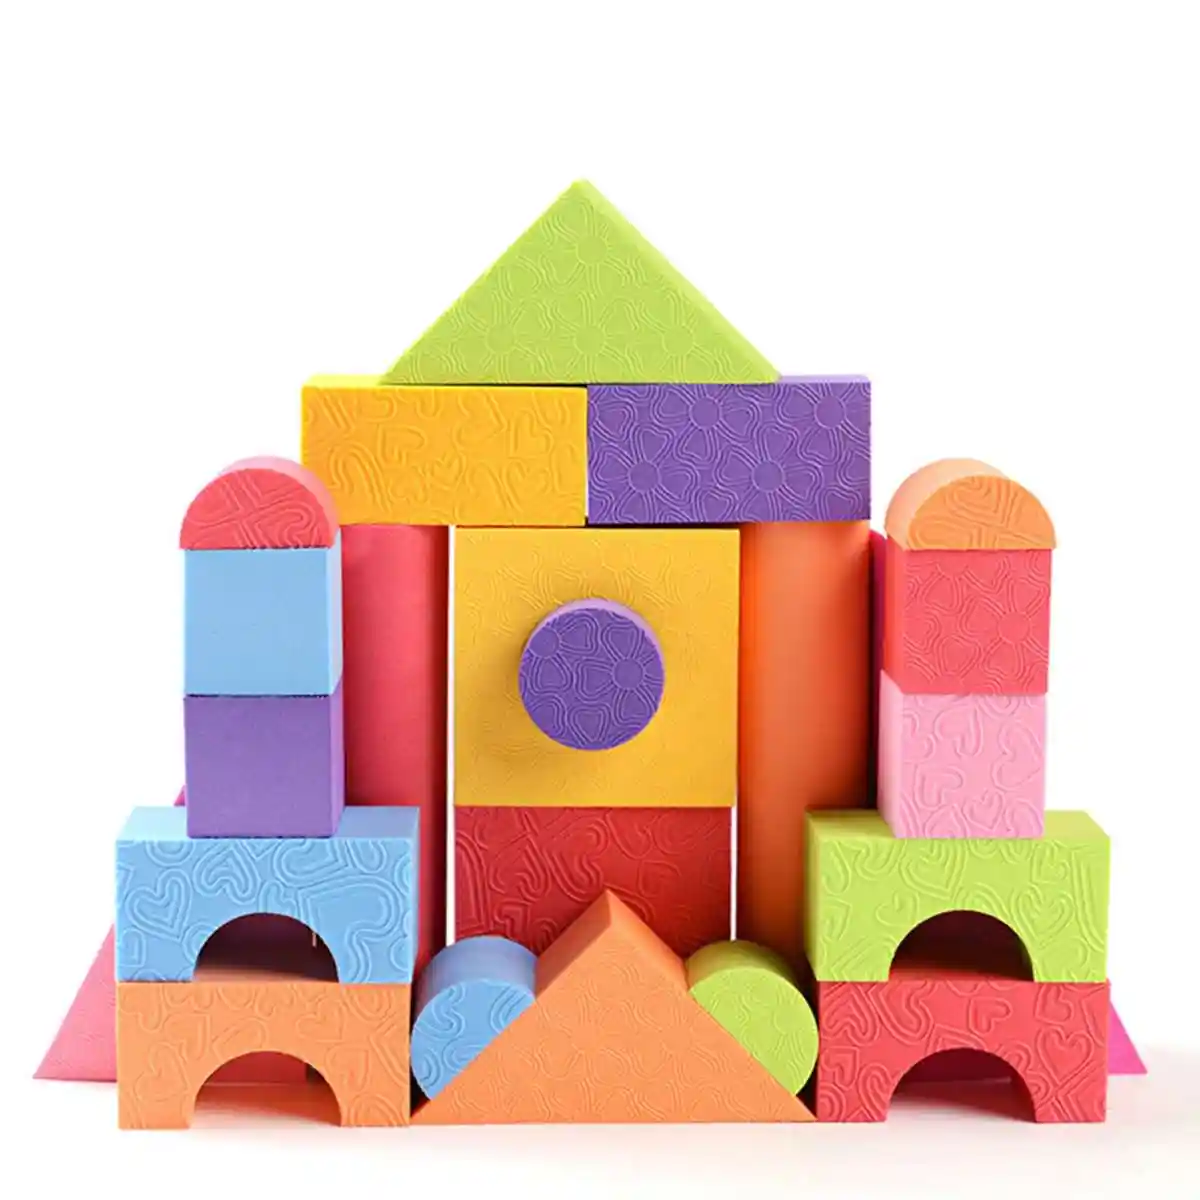 soft and safe building blocks